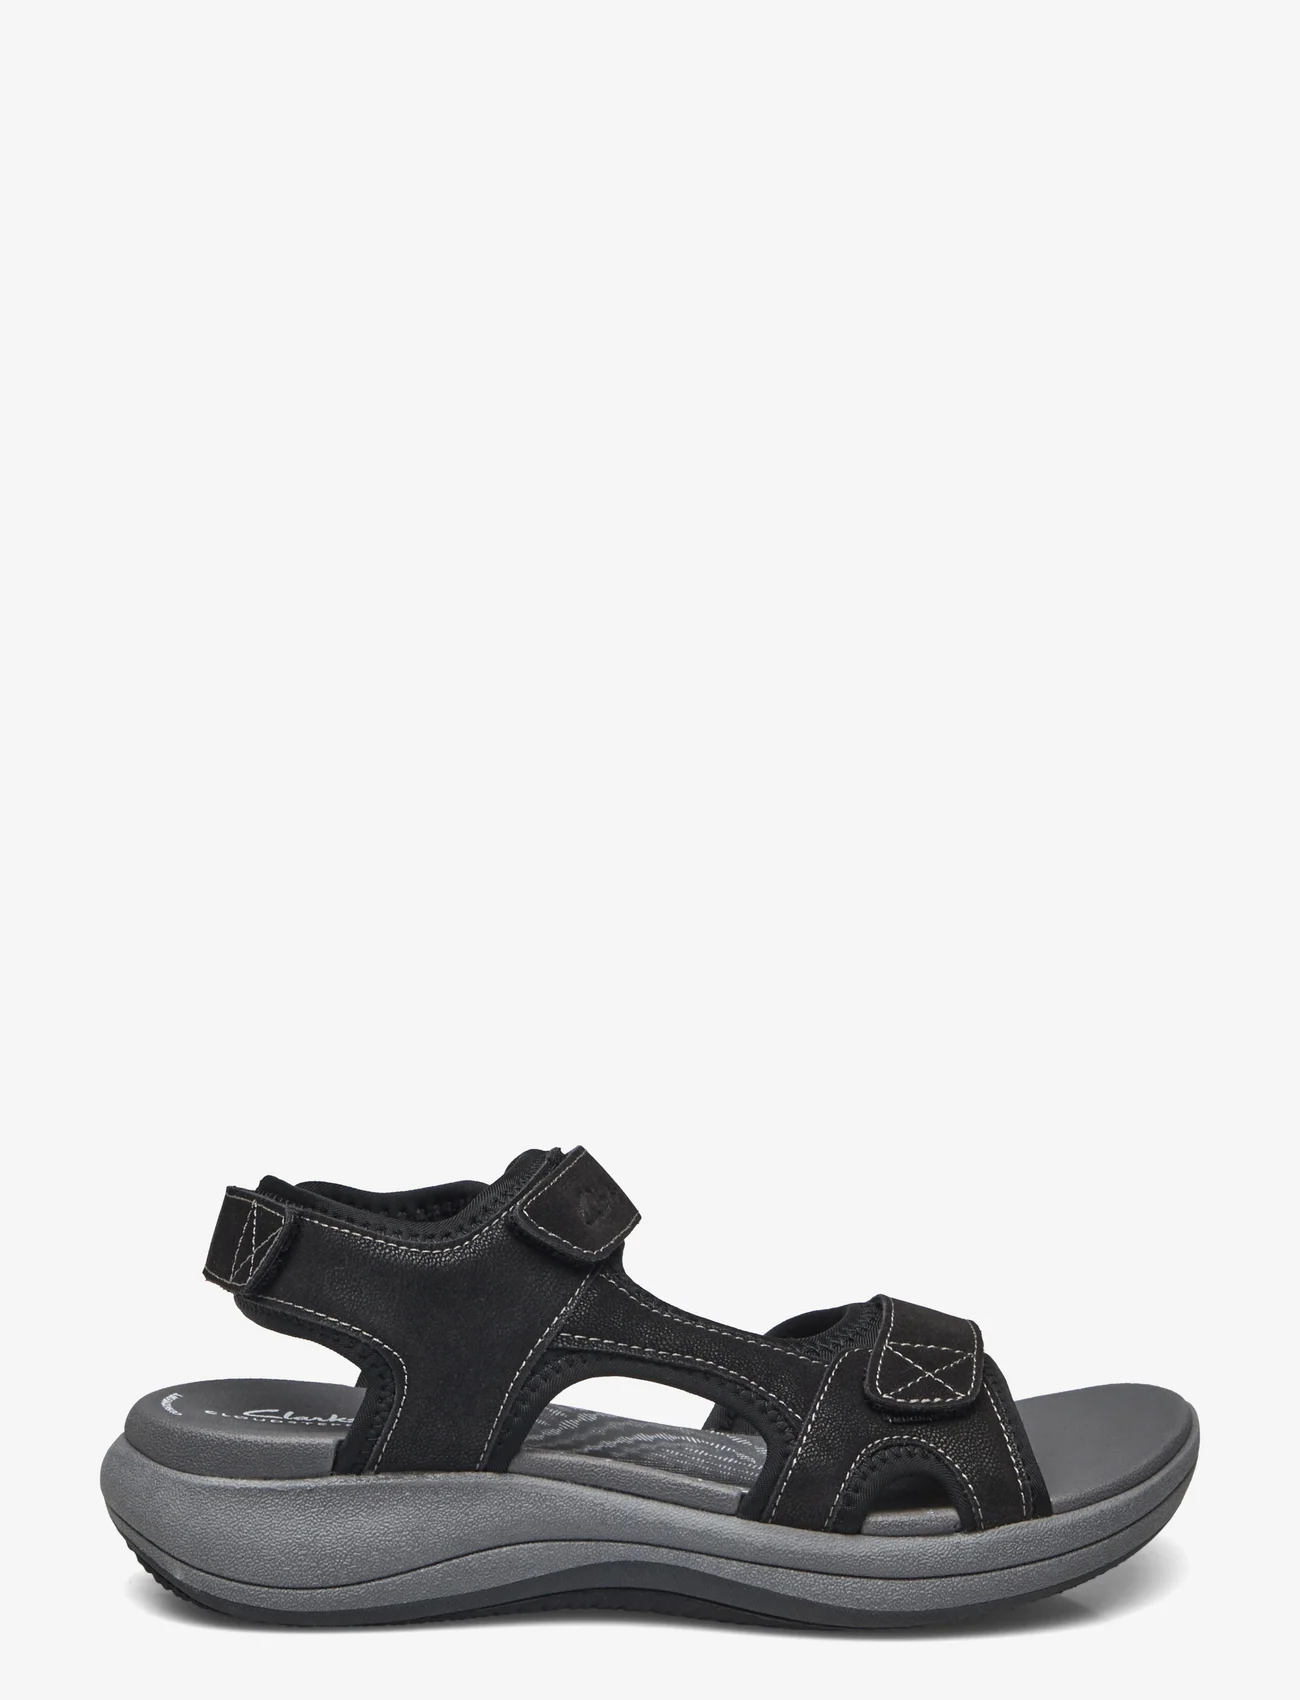 Clarks - Mira Bay D - flat sandals - 1001 black - 1